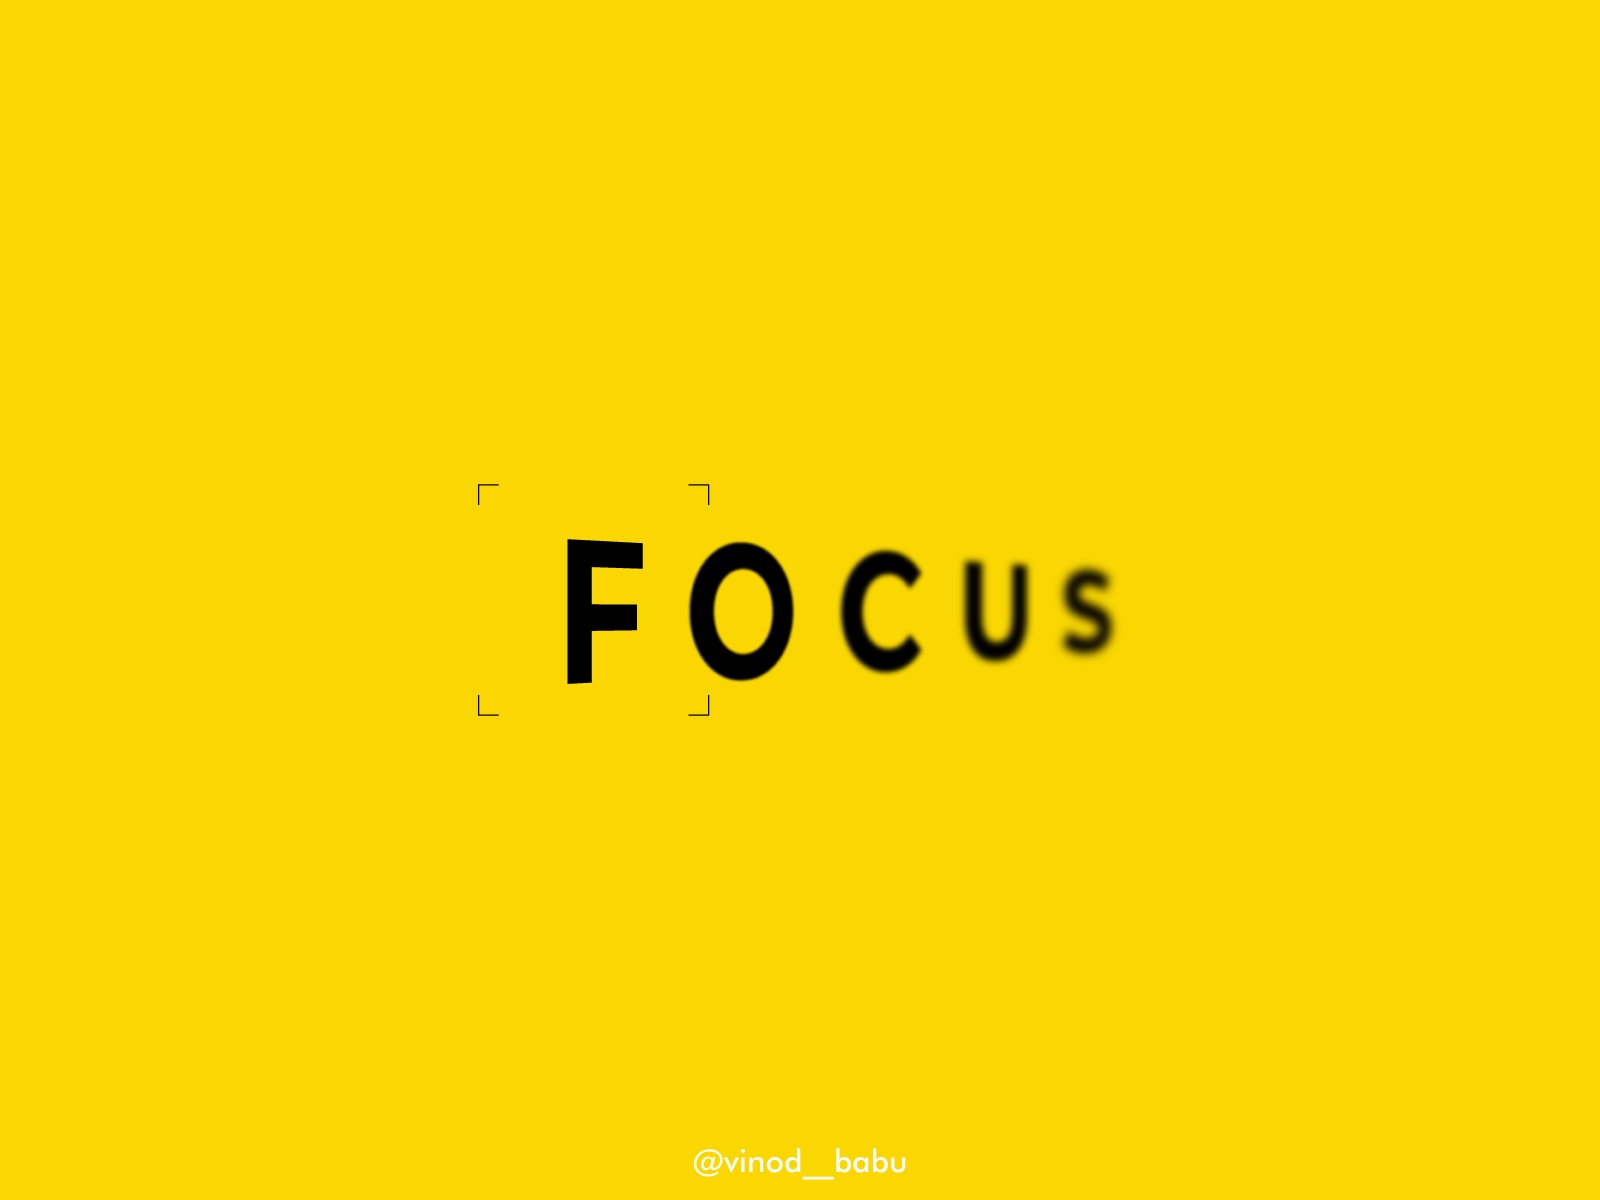 Focus Logo by Vinoth Babu on Dribbble